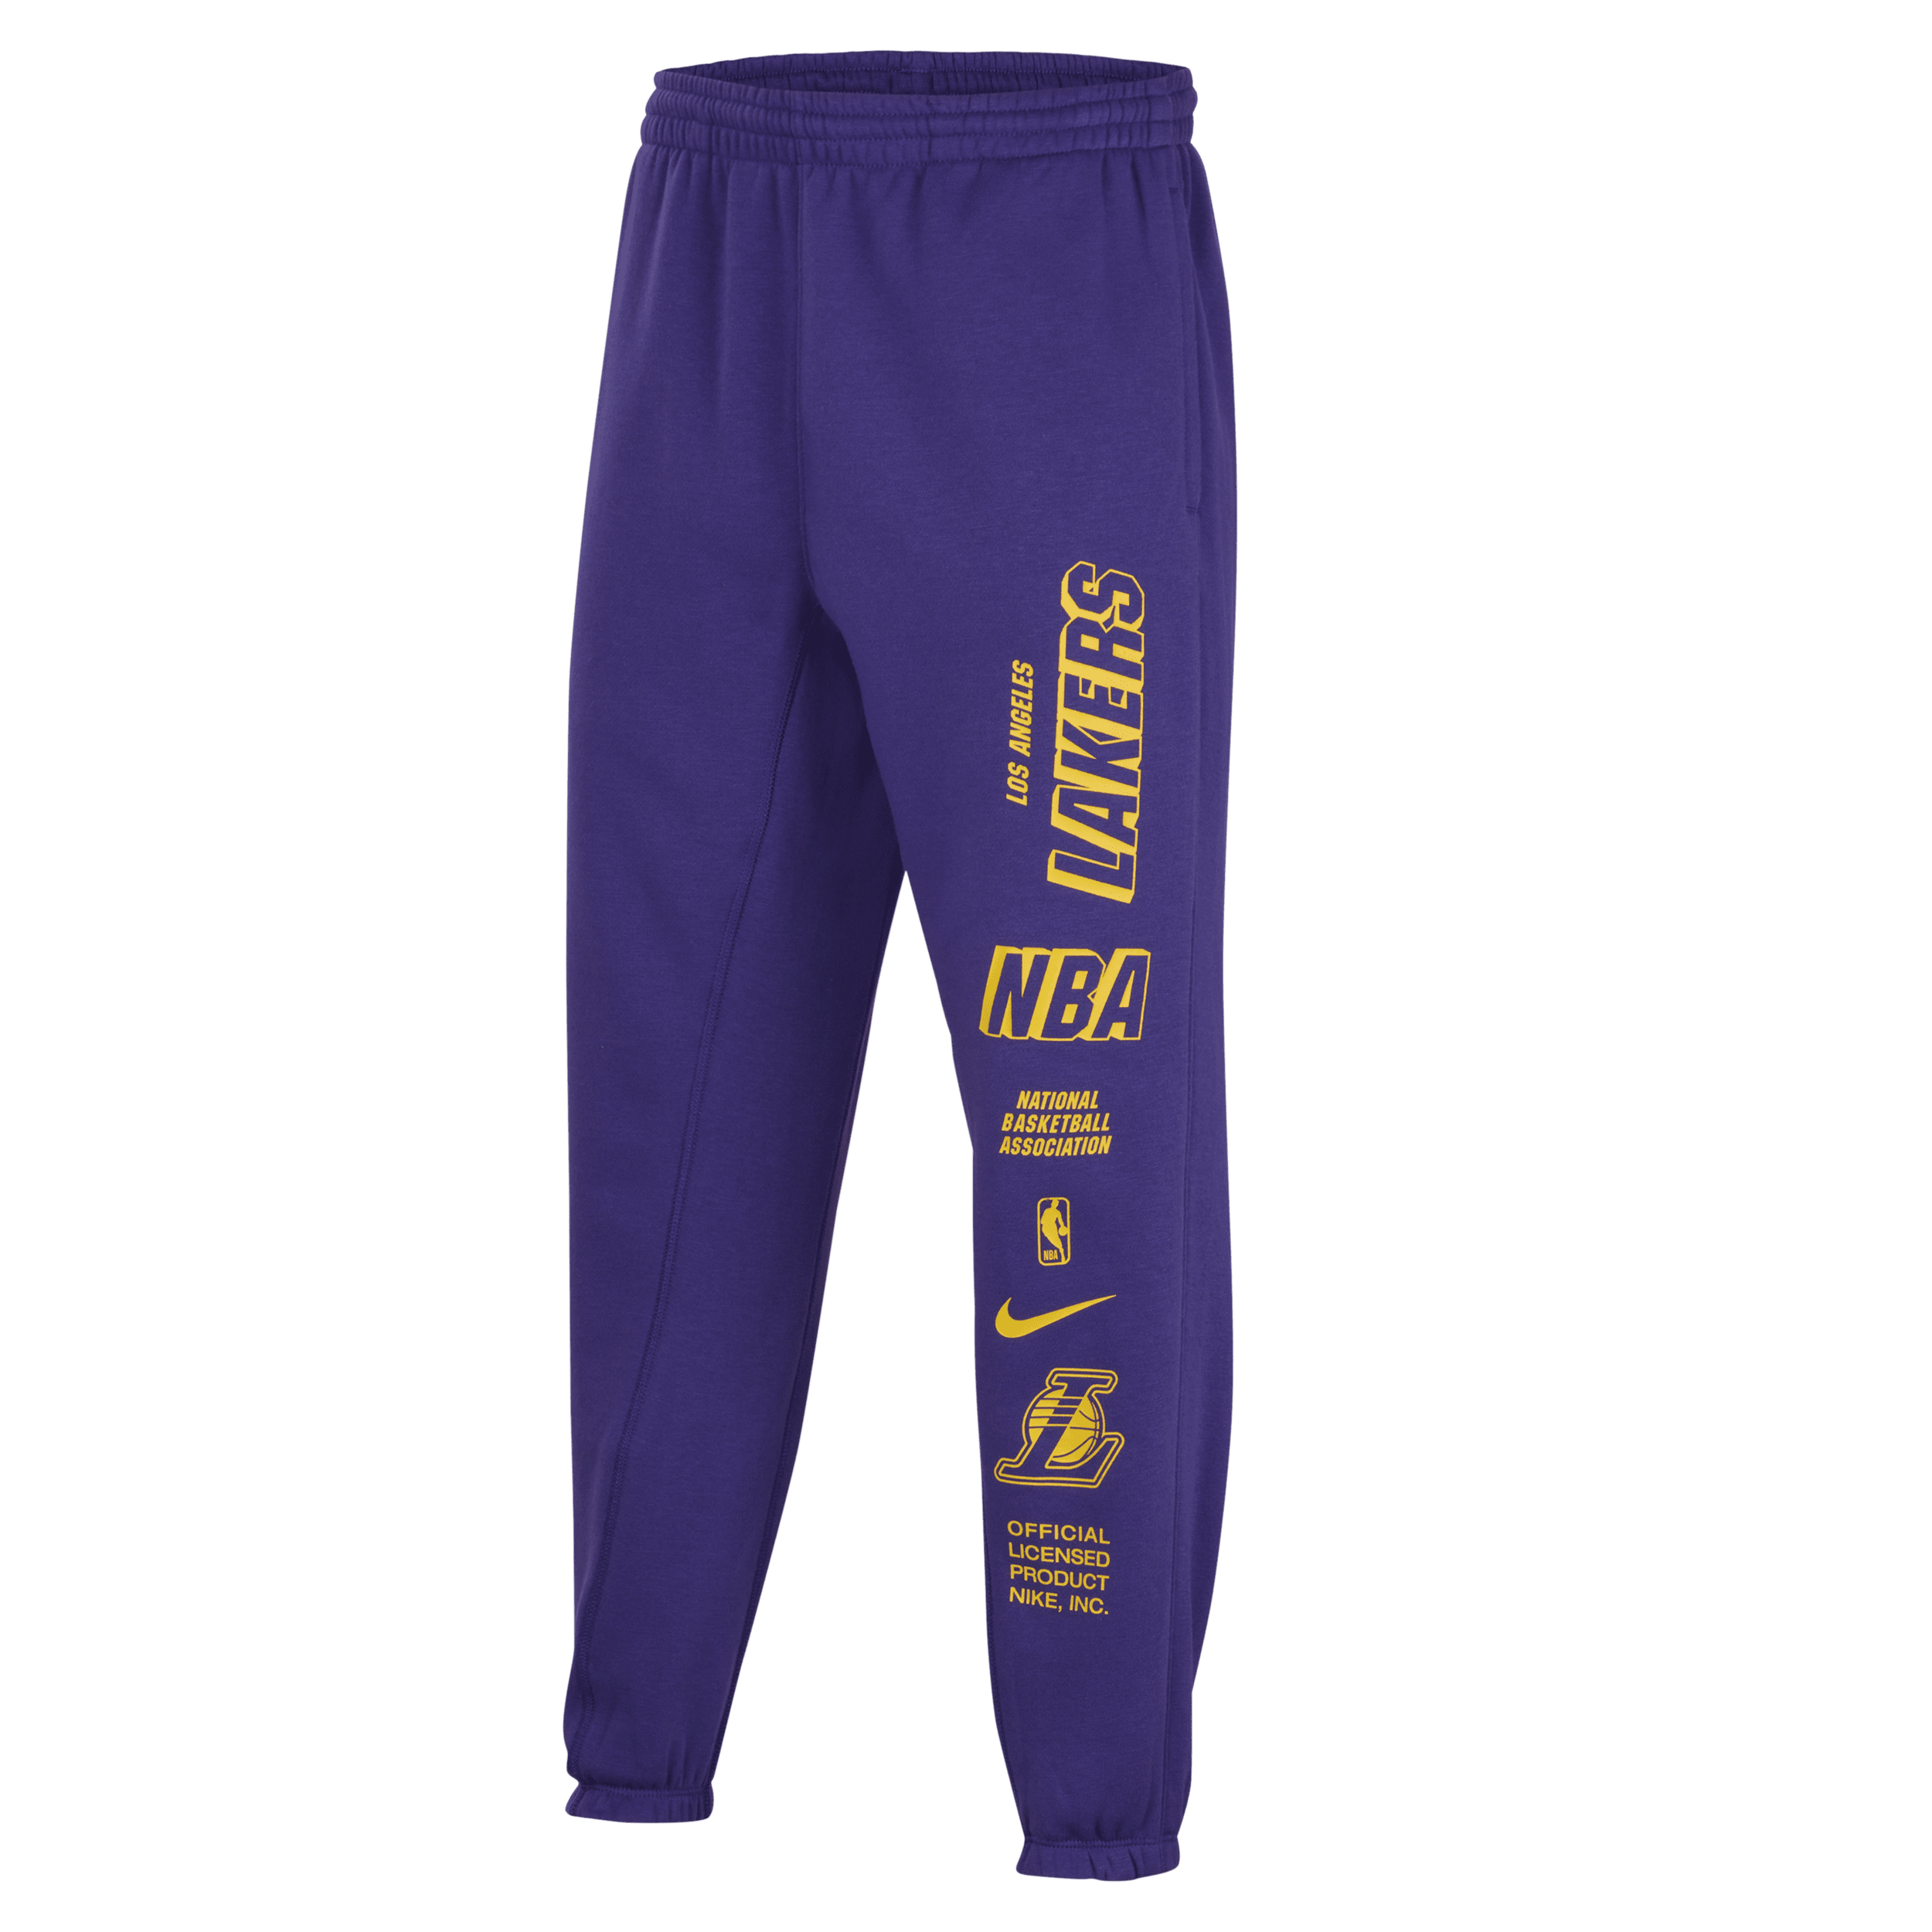 Los Angeles Lakers Courtside Pantalón de tejido Fleece Nike NBA - Niño/a - Morado